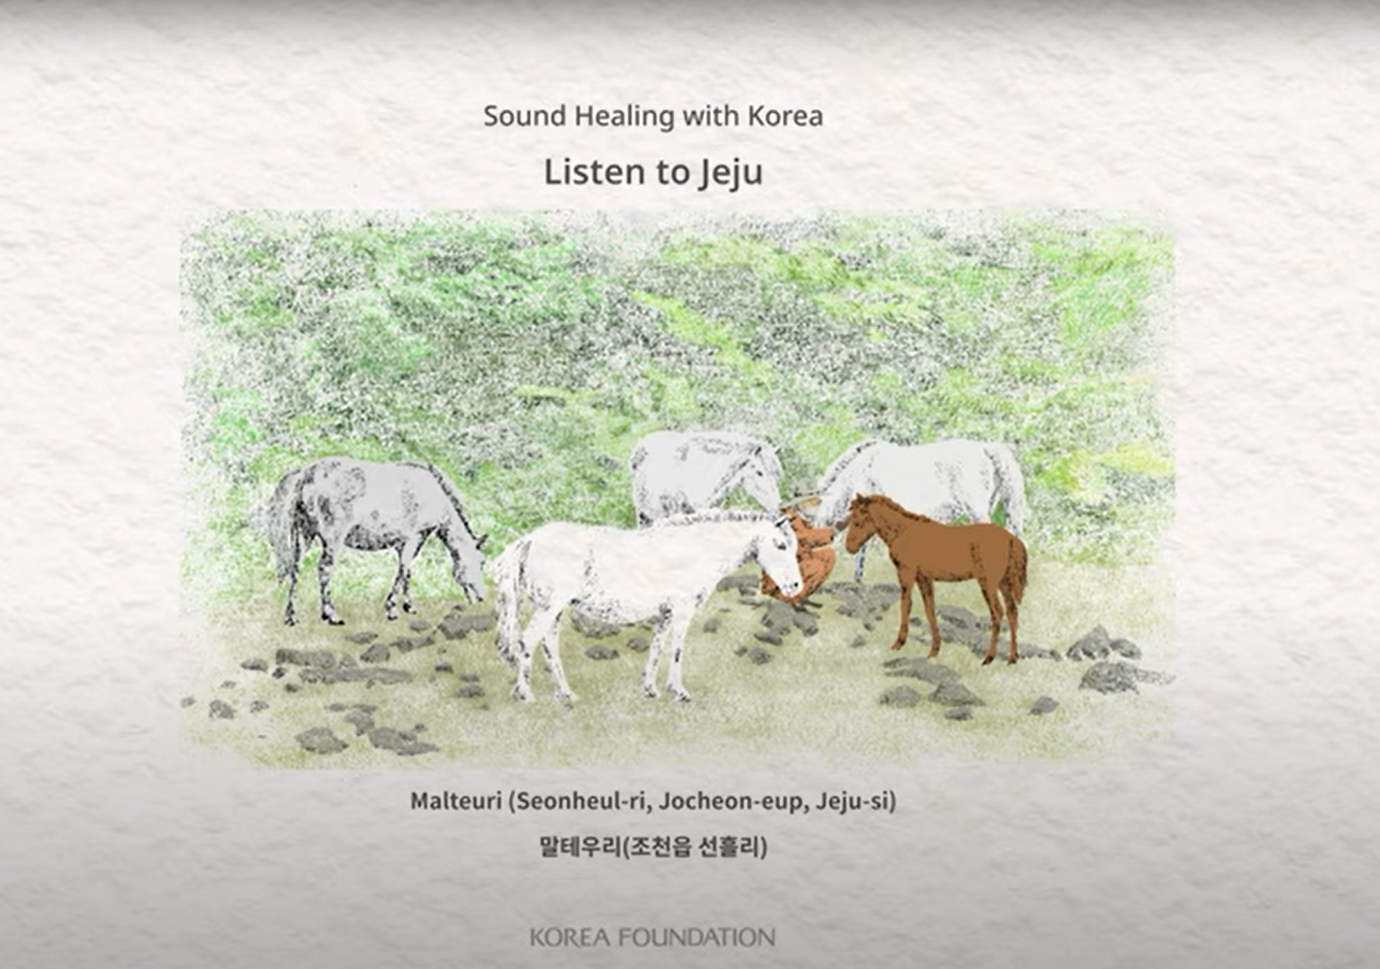 [ASMR] 2021 Sound Healing with Korea - Listen to Jeju | 4. Malteuri